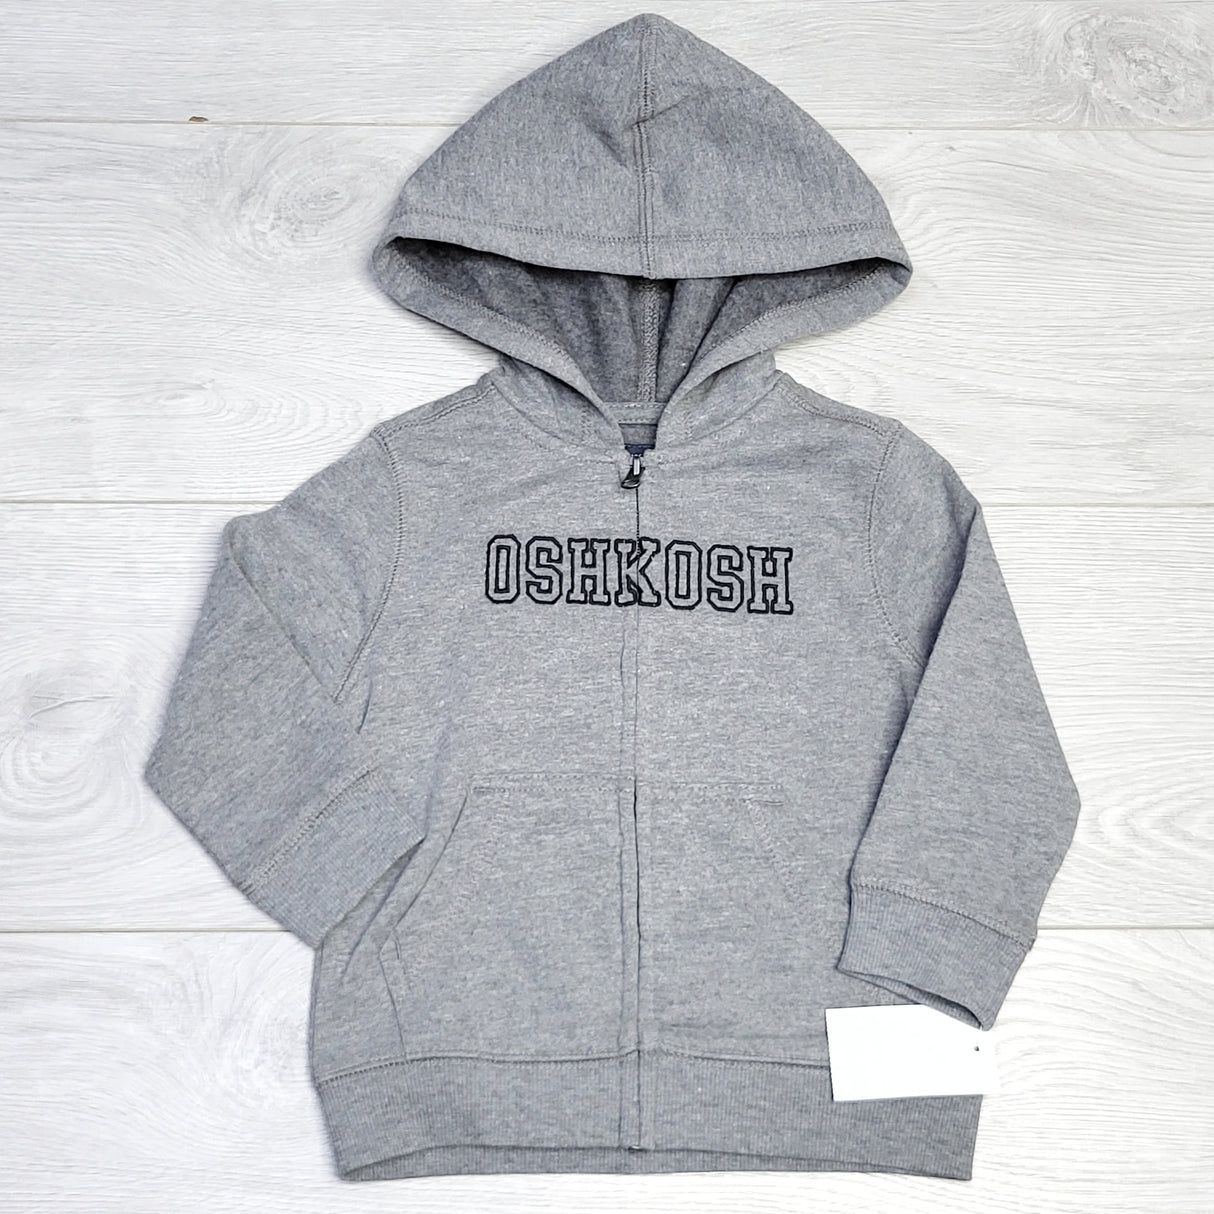 MSNDS11 - Oshkosh grey zippered cotton hoodie. Size 12 months